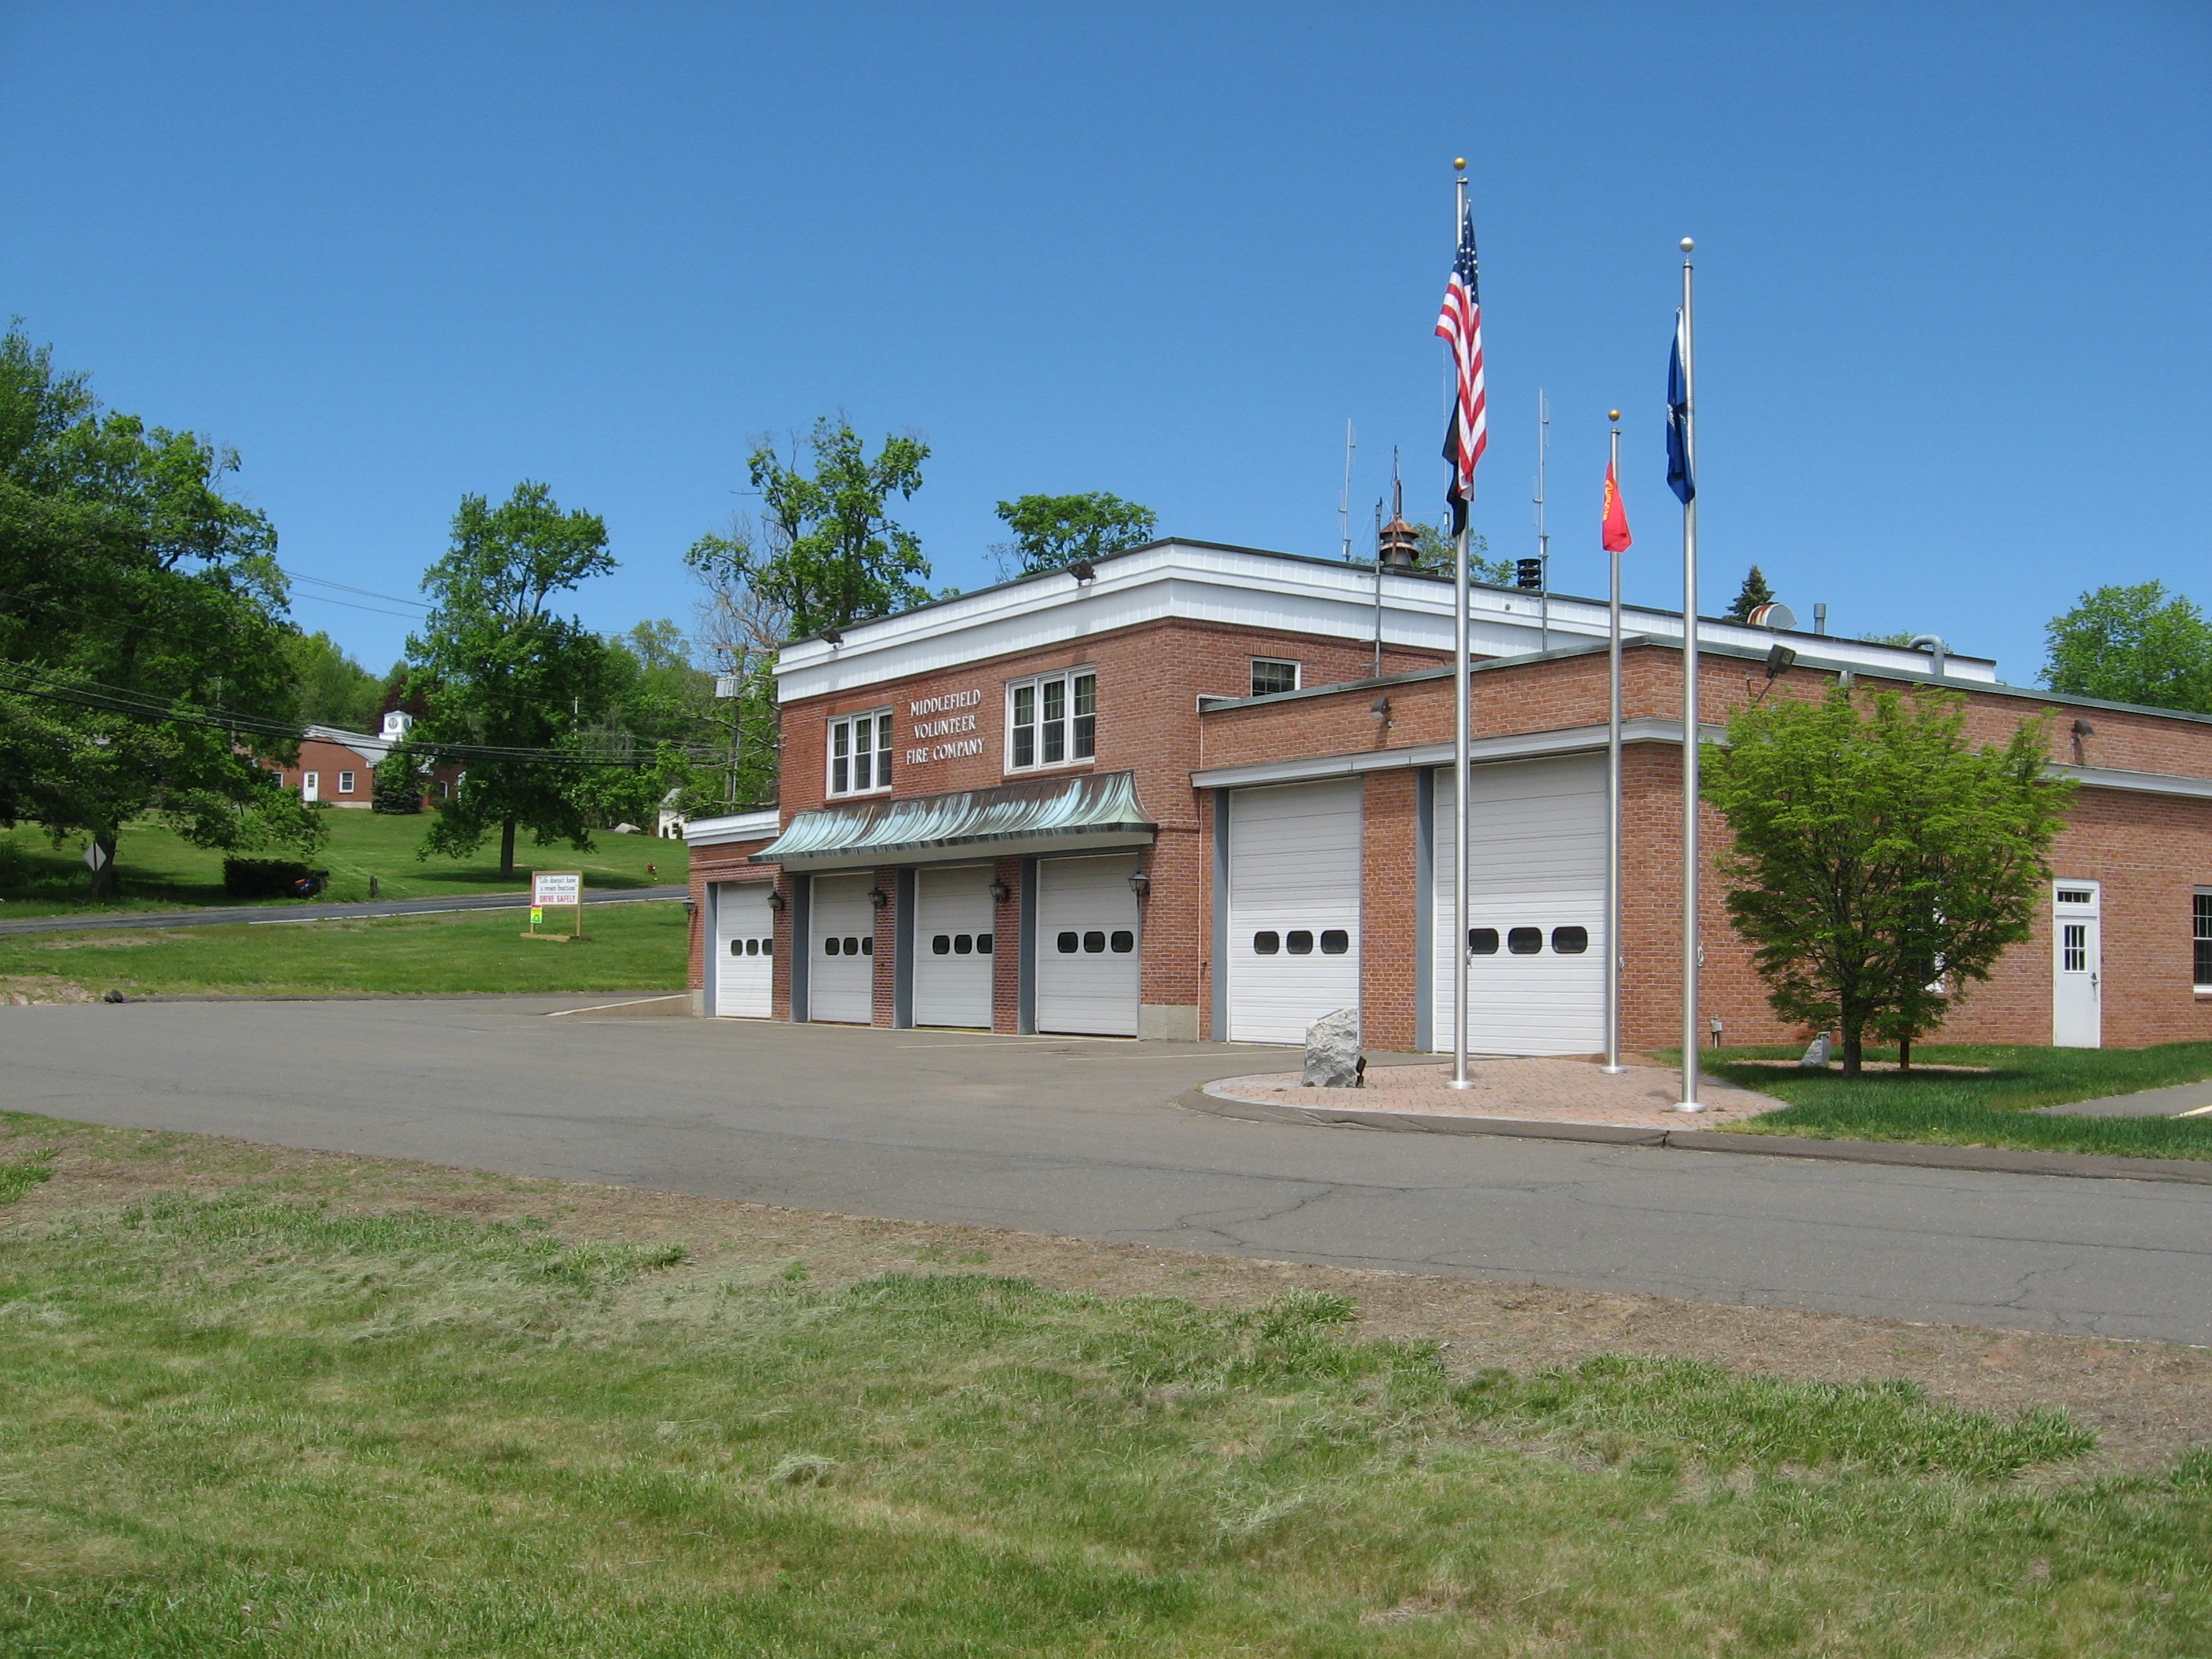 Middlefield Volunteer Fire Company